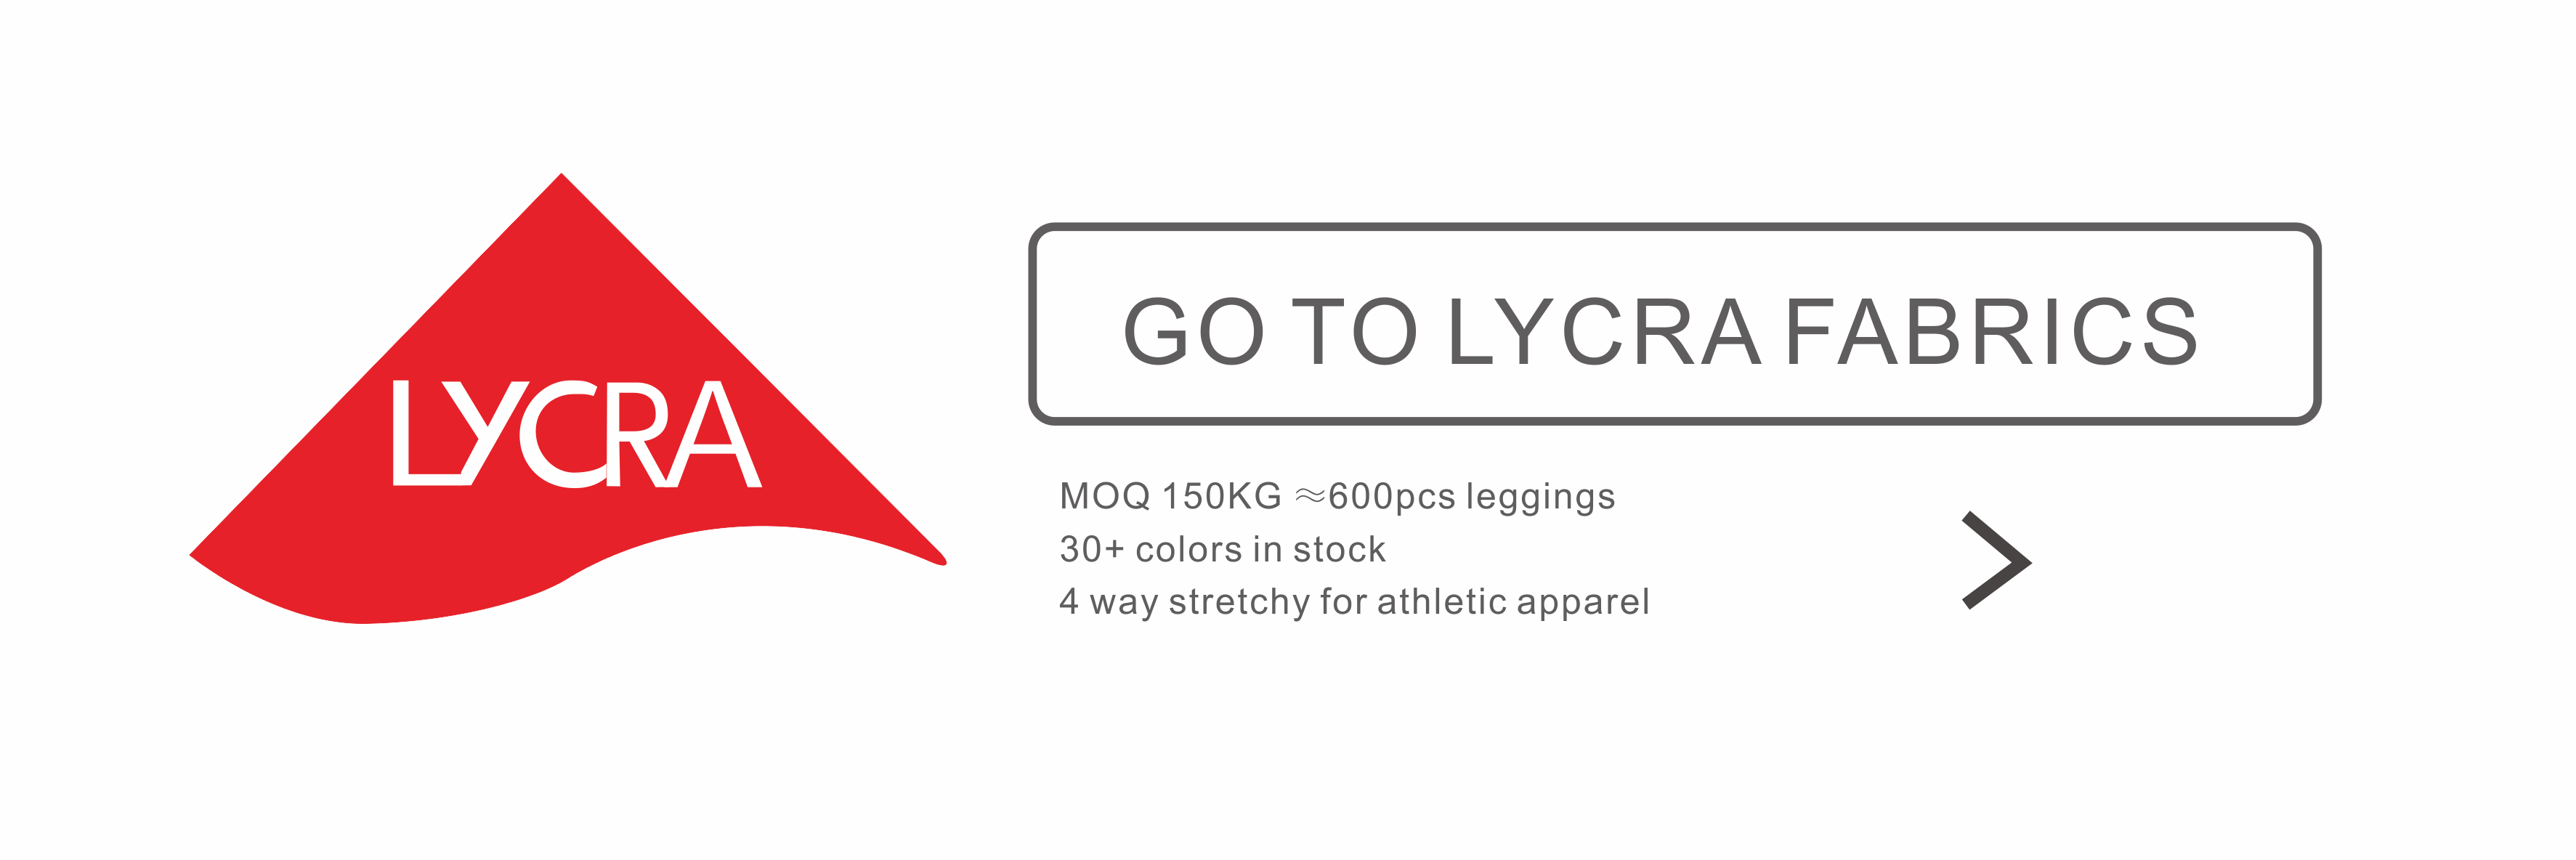 go to lycra 4 way stretchy fabrics lycra leggings sport bras supplier